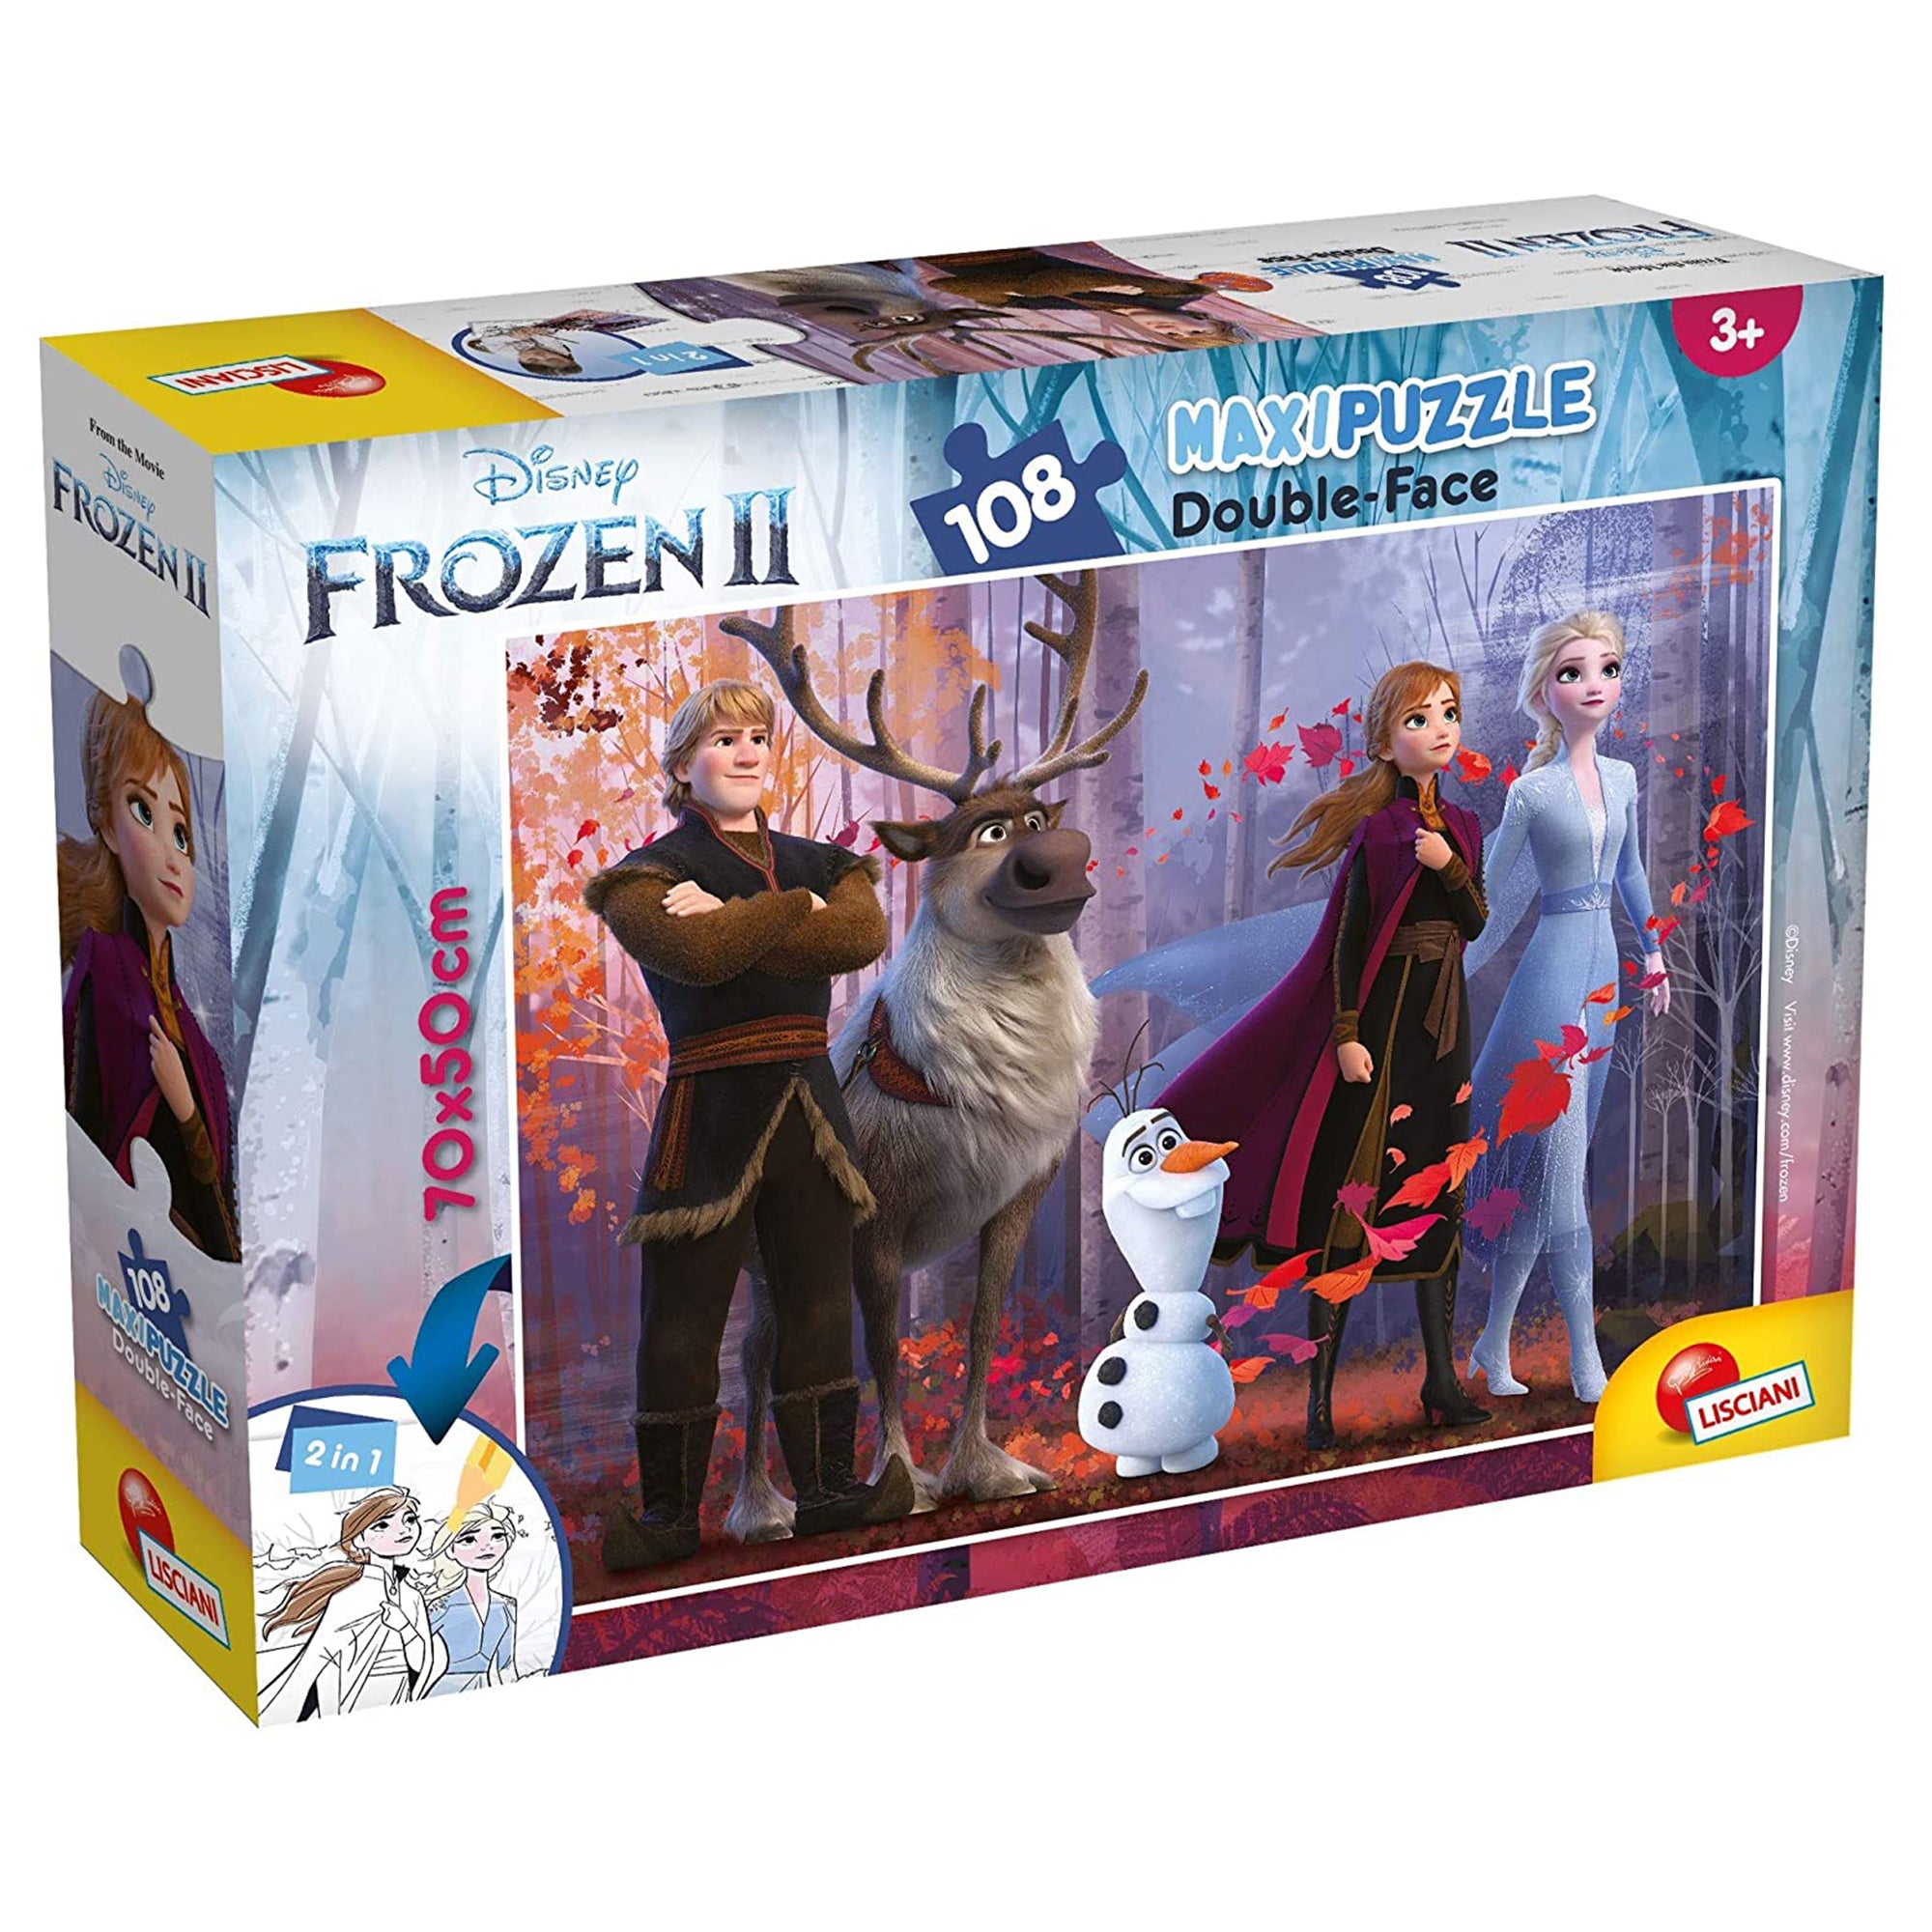 Puzzle maxi double-face Disney Frozen II 108 pz retro colorabile 2641